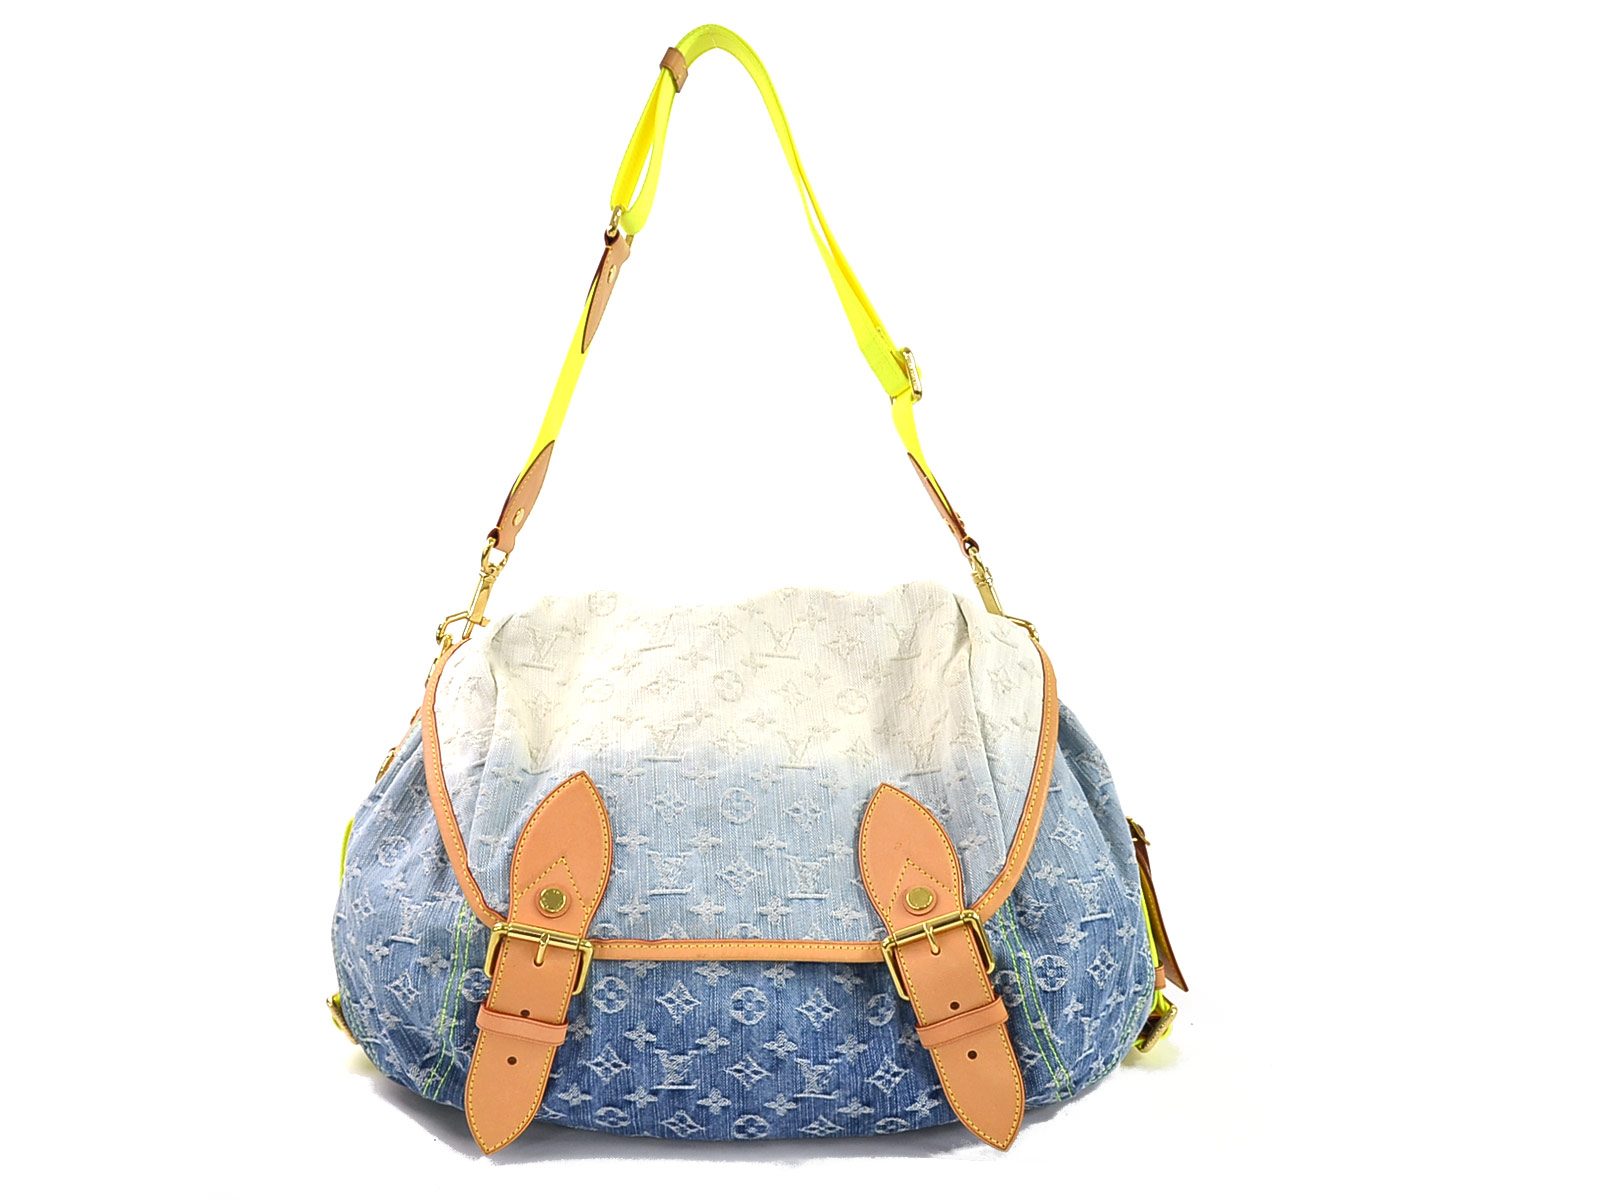 Auth Louis Vuitton Monogram Denim Sunrise Shoulder Bag Blue/Neon Green - 98182a | eBay